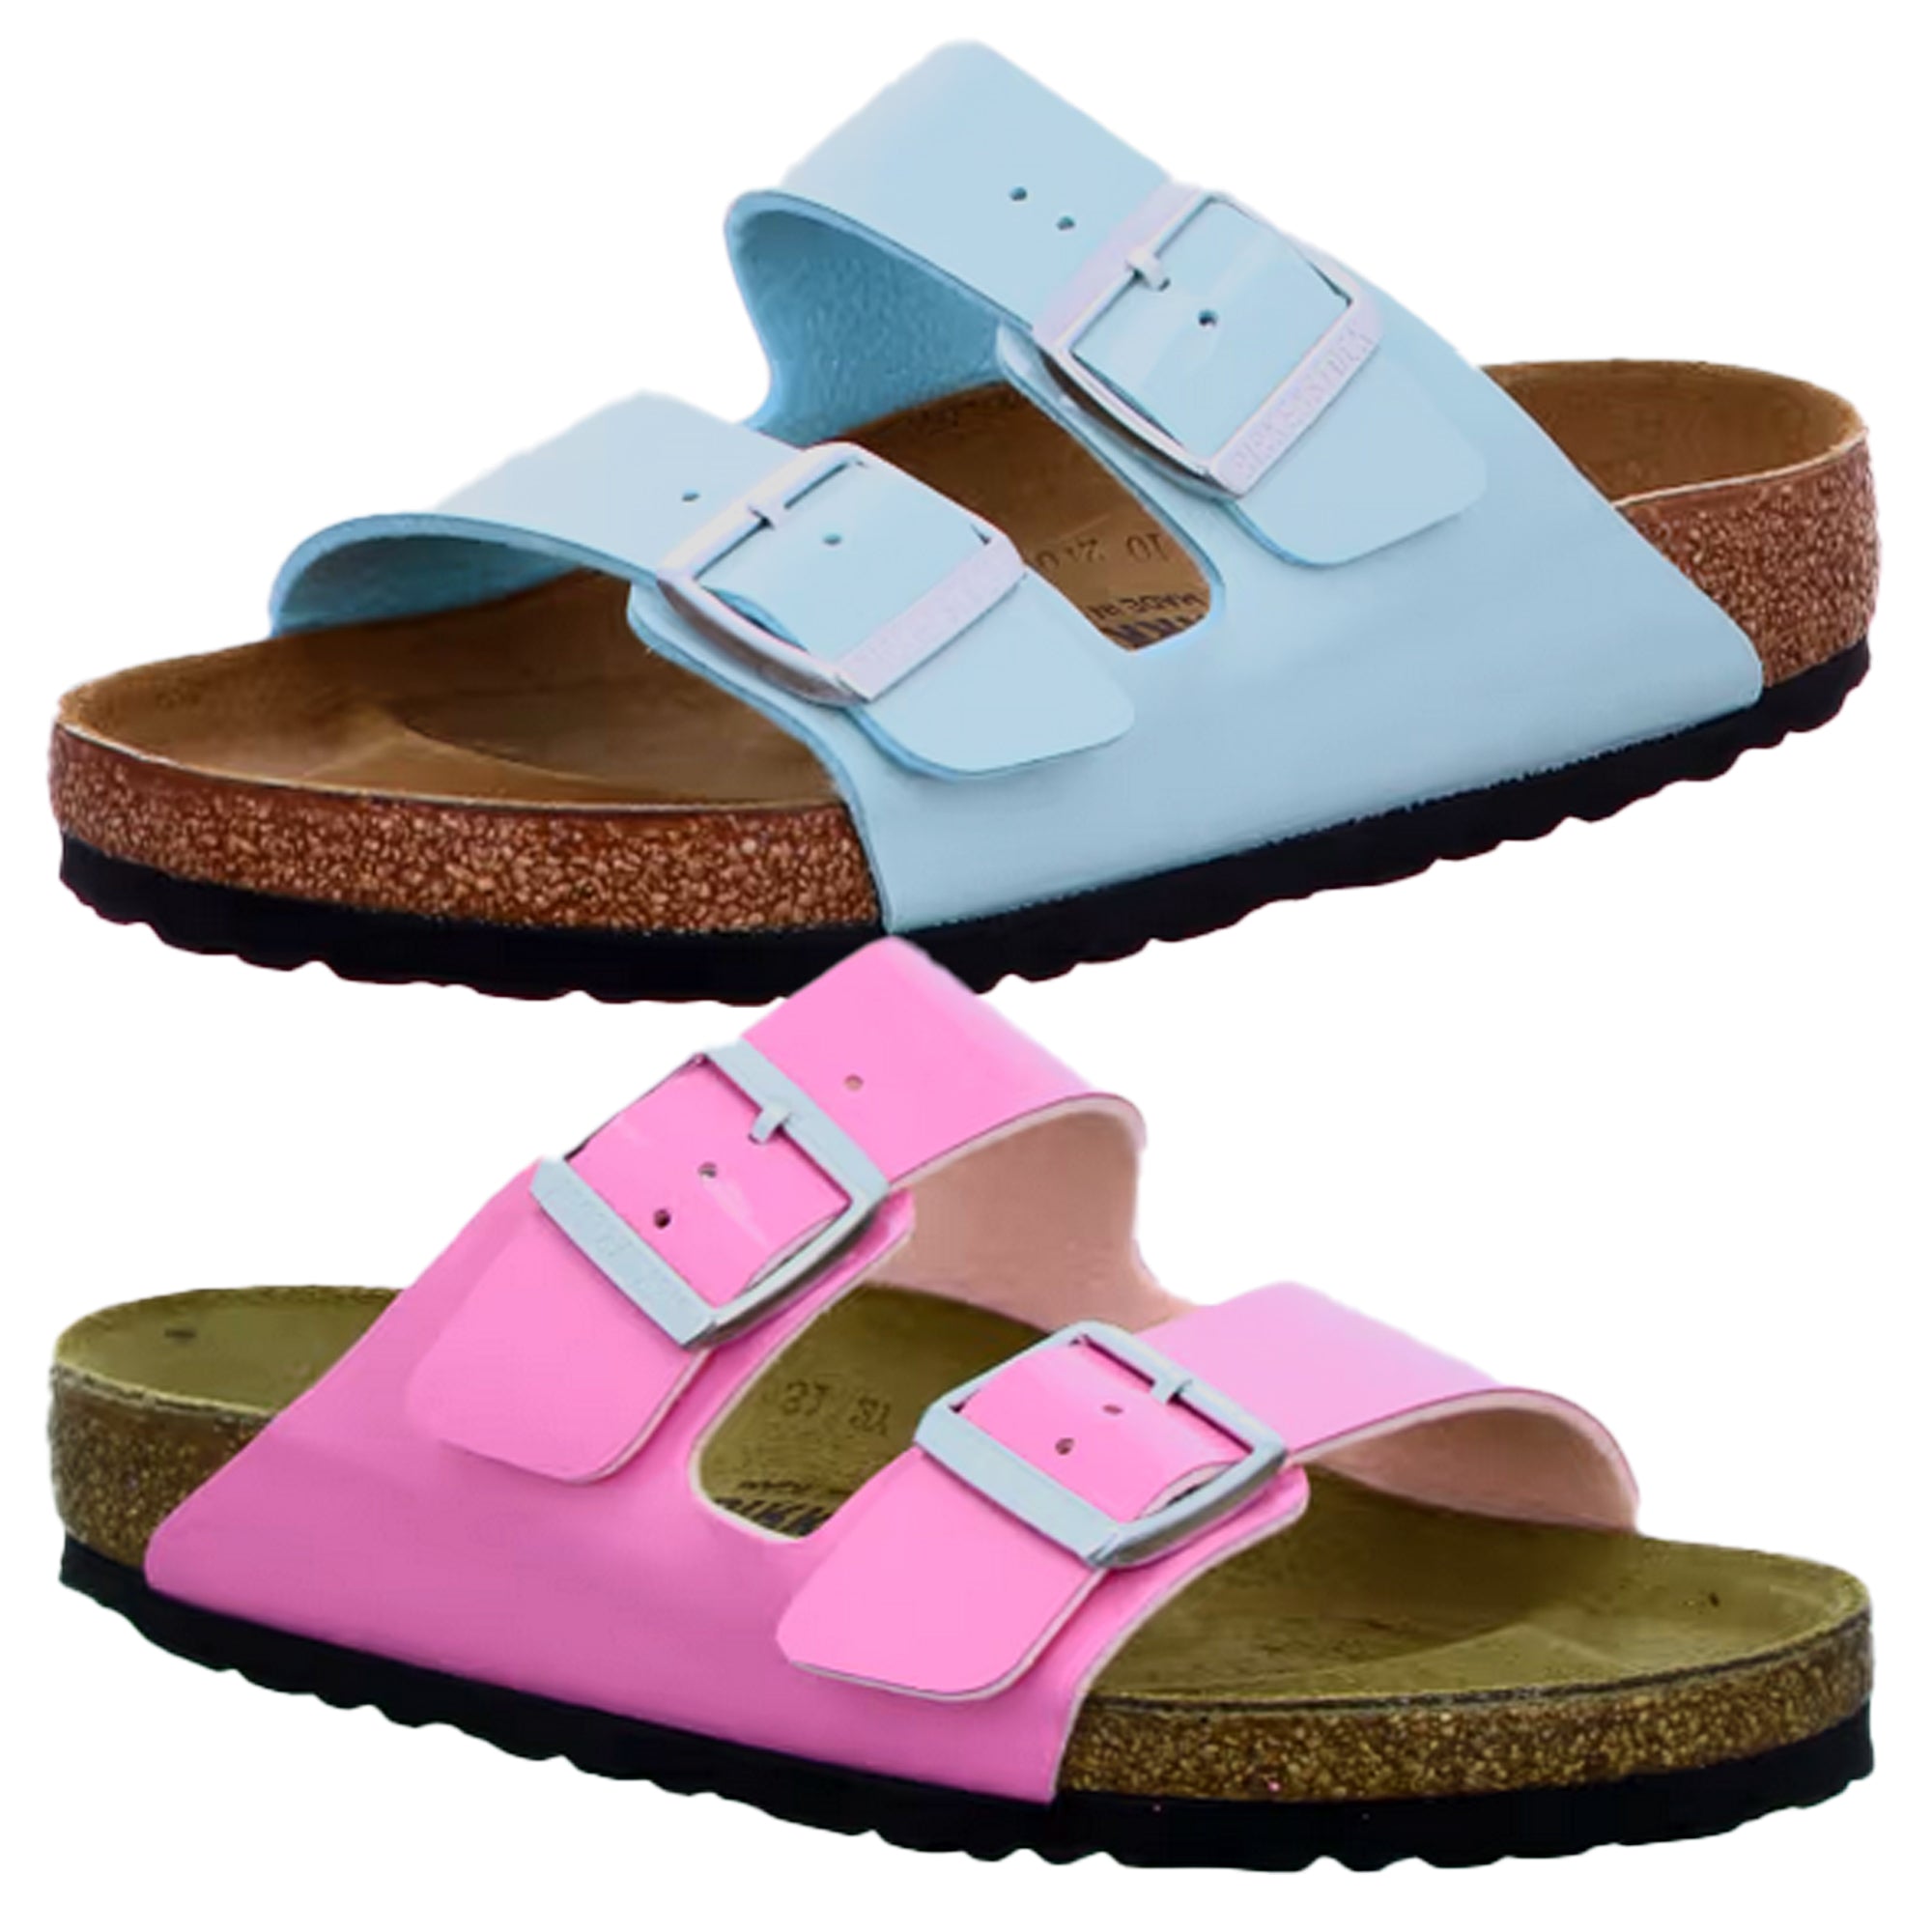 Birkenstock Arizona Patent BF Candy Pink Surf Green Sandals Slides Mules New